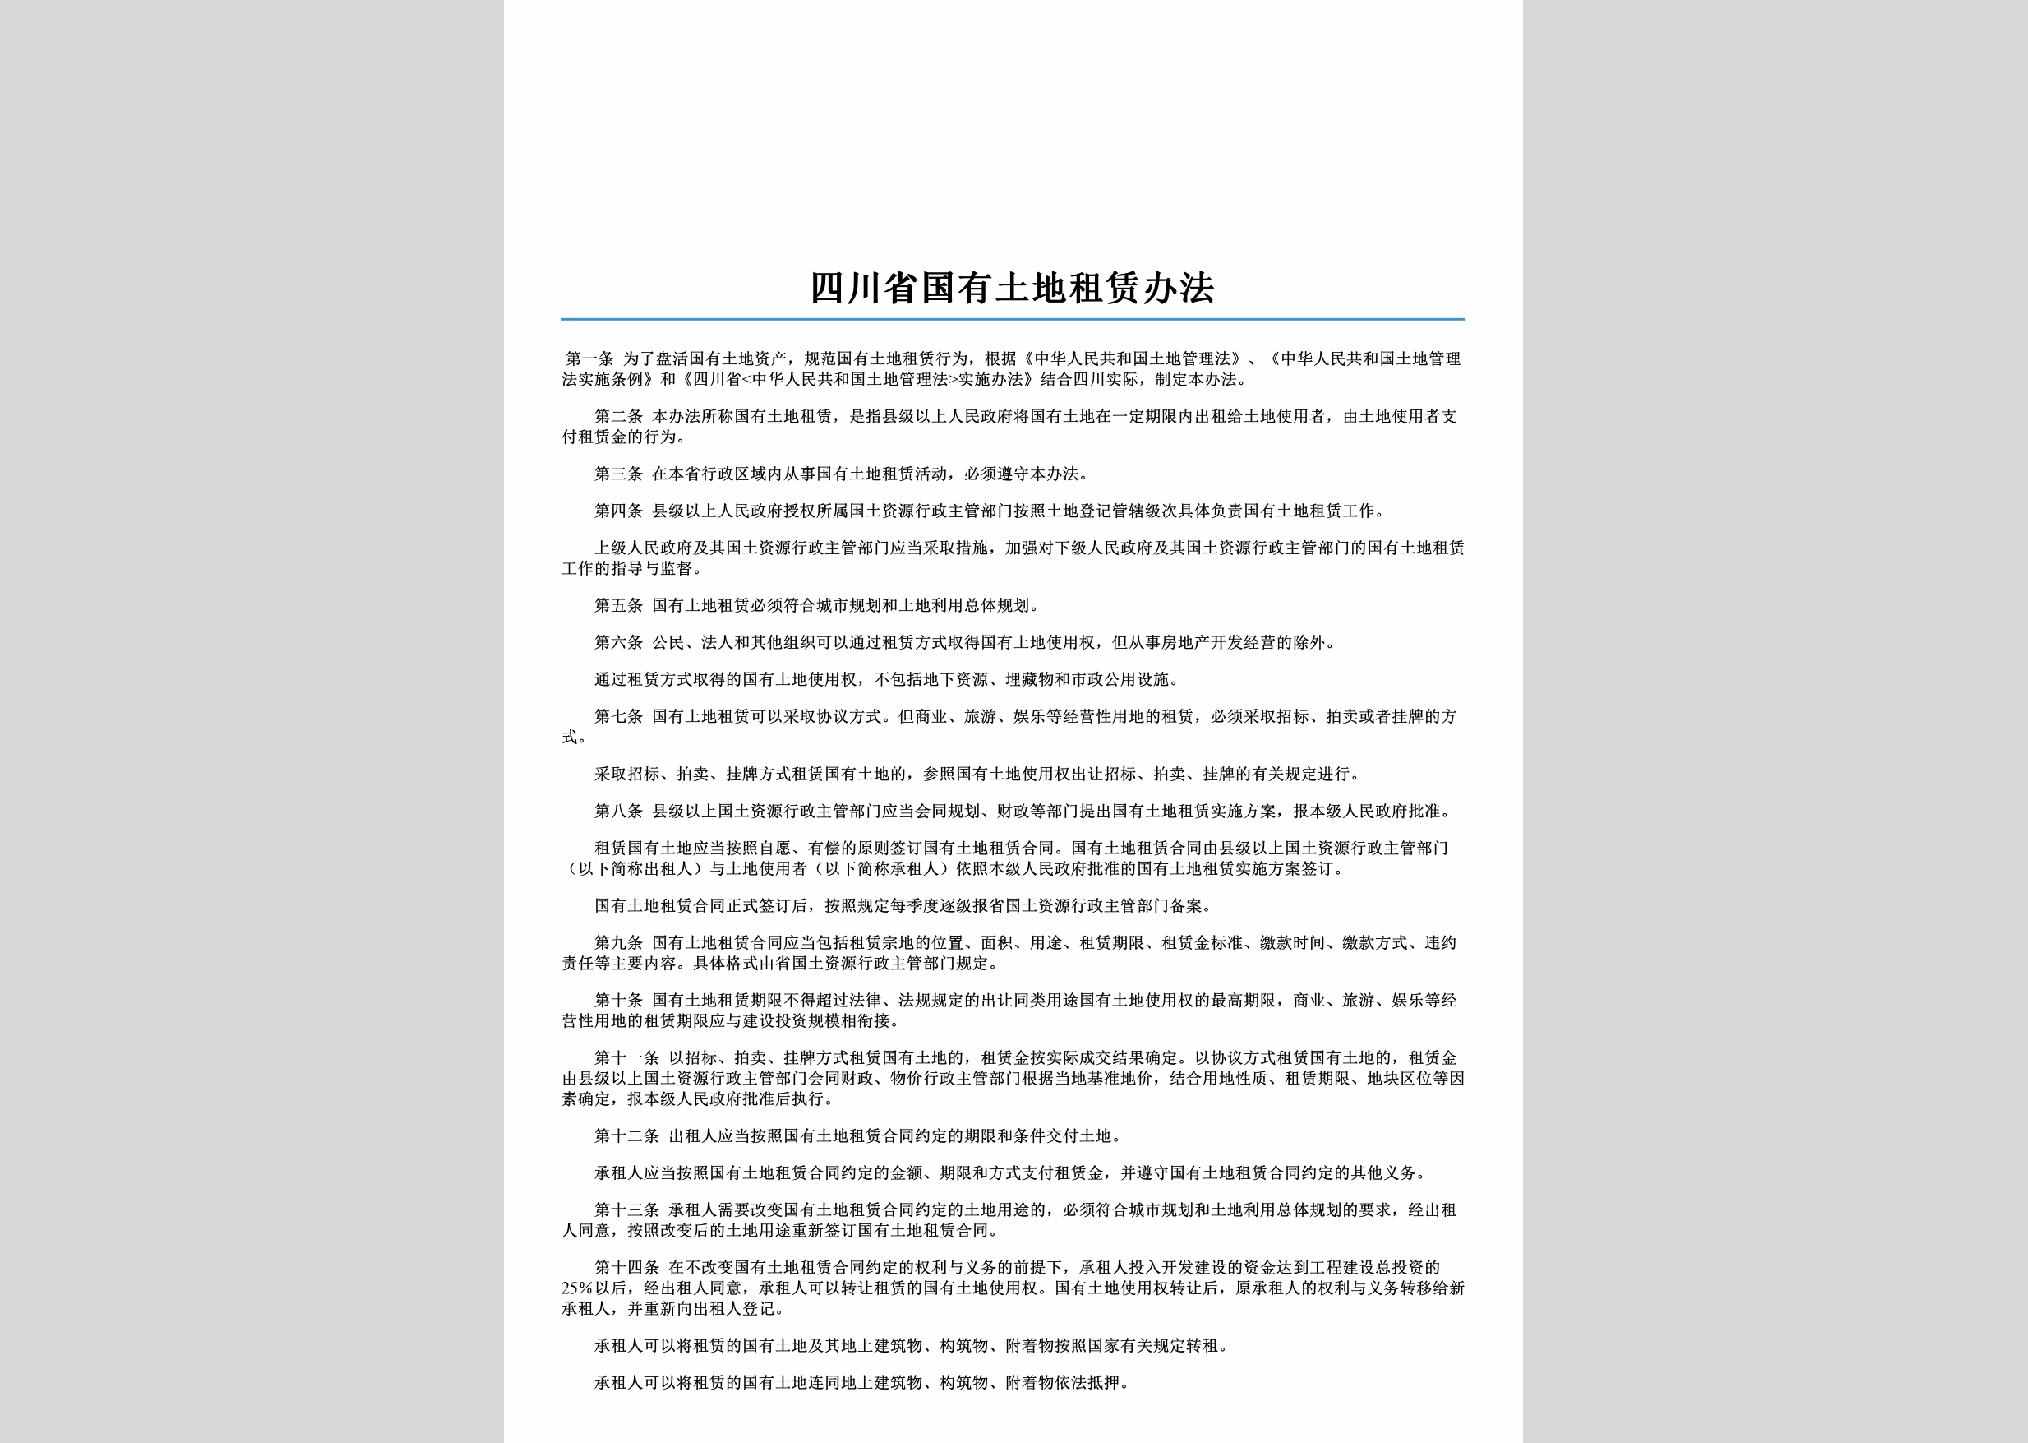 SC-GYTDZLBF-2003：四川省国有土地租赁办法